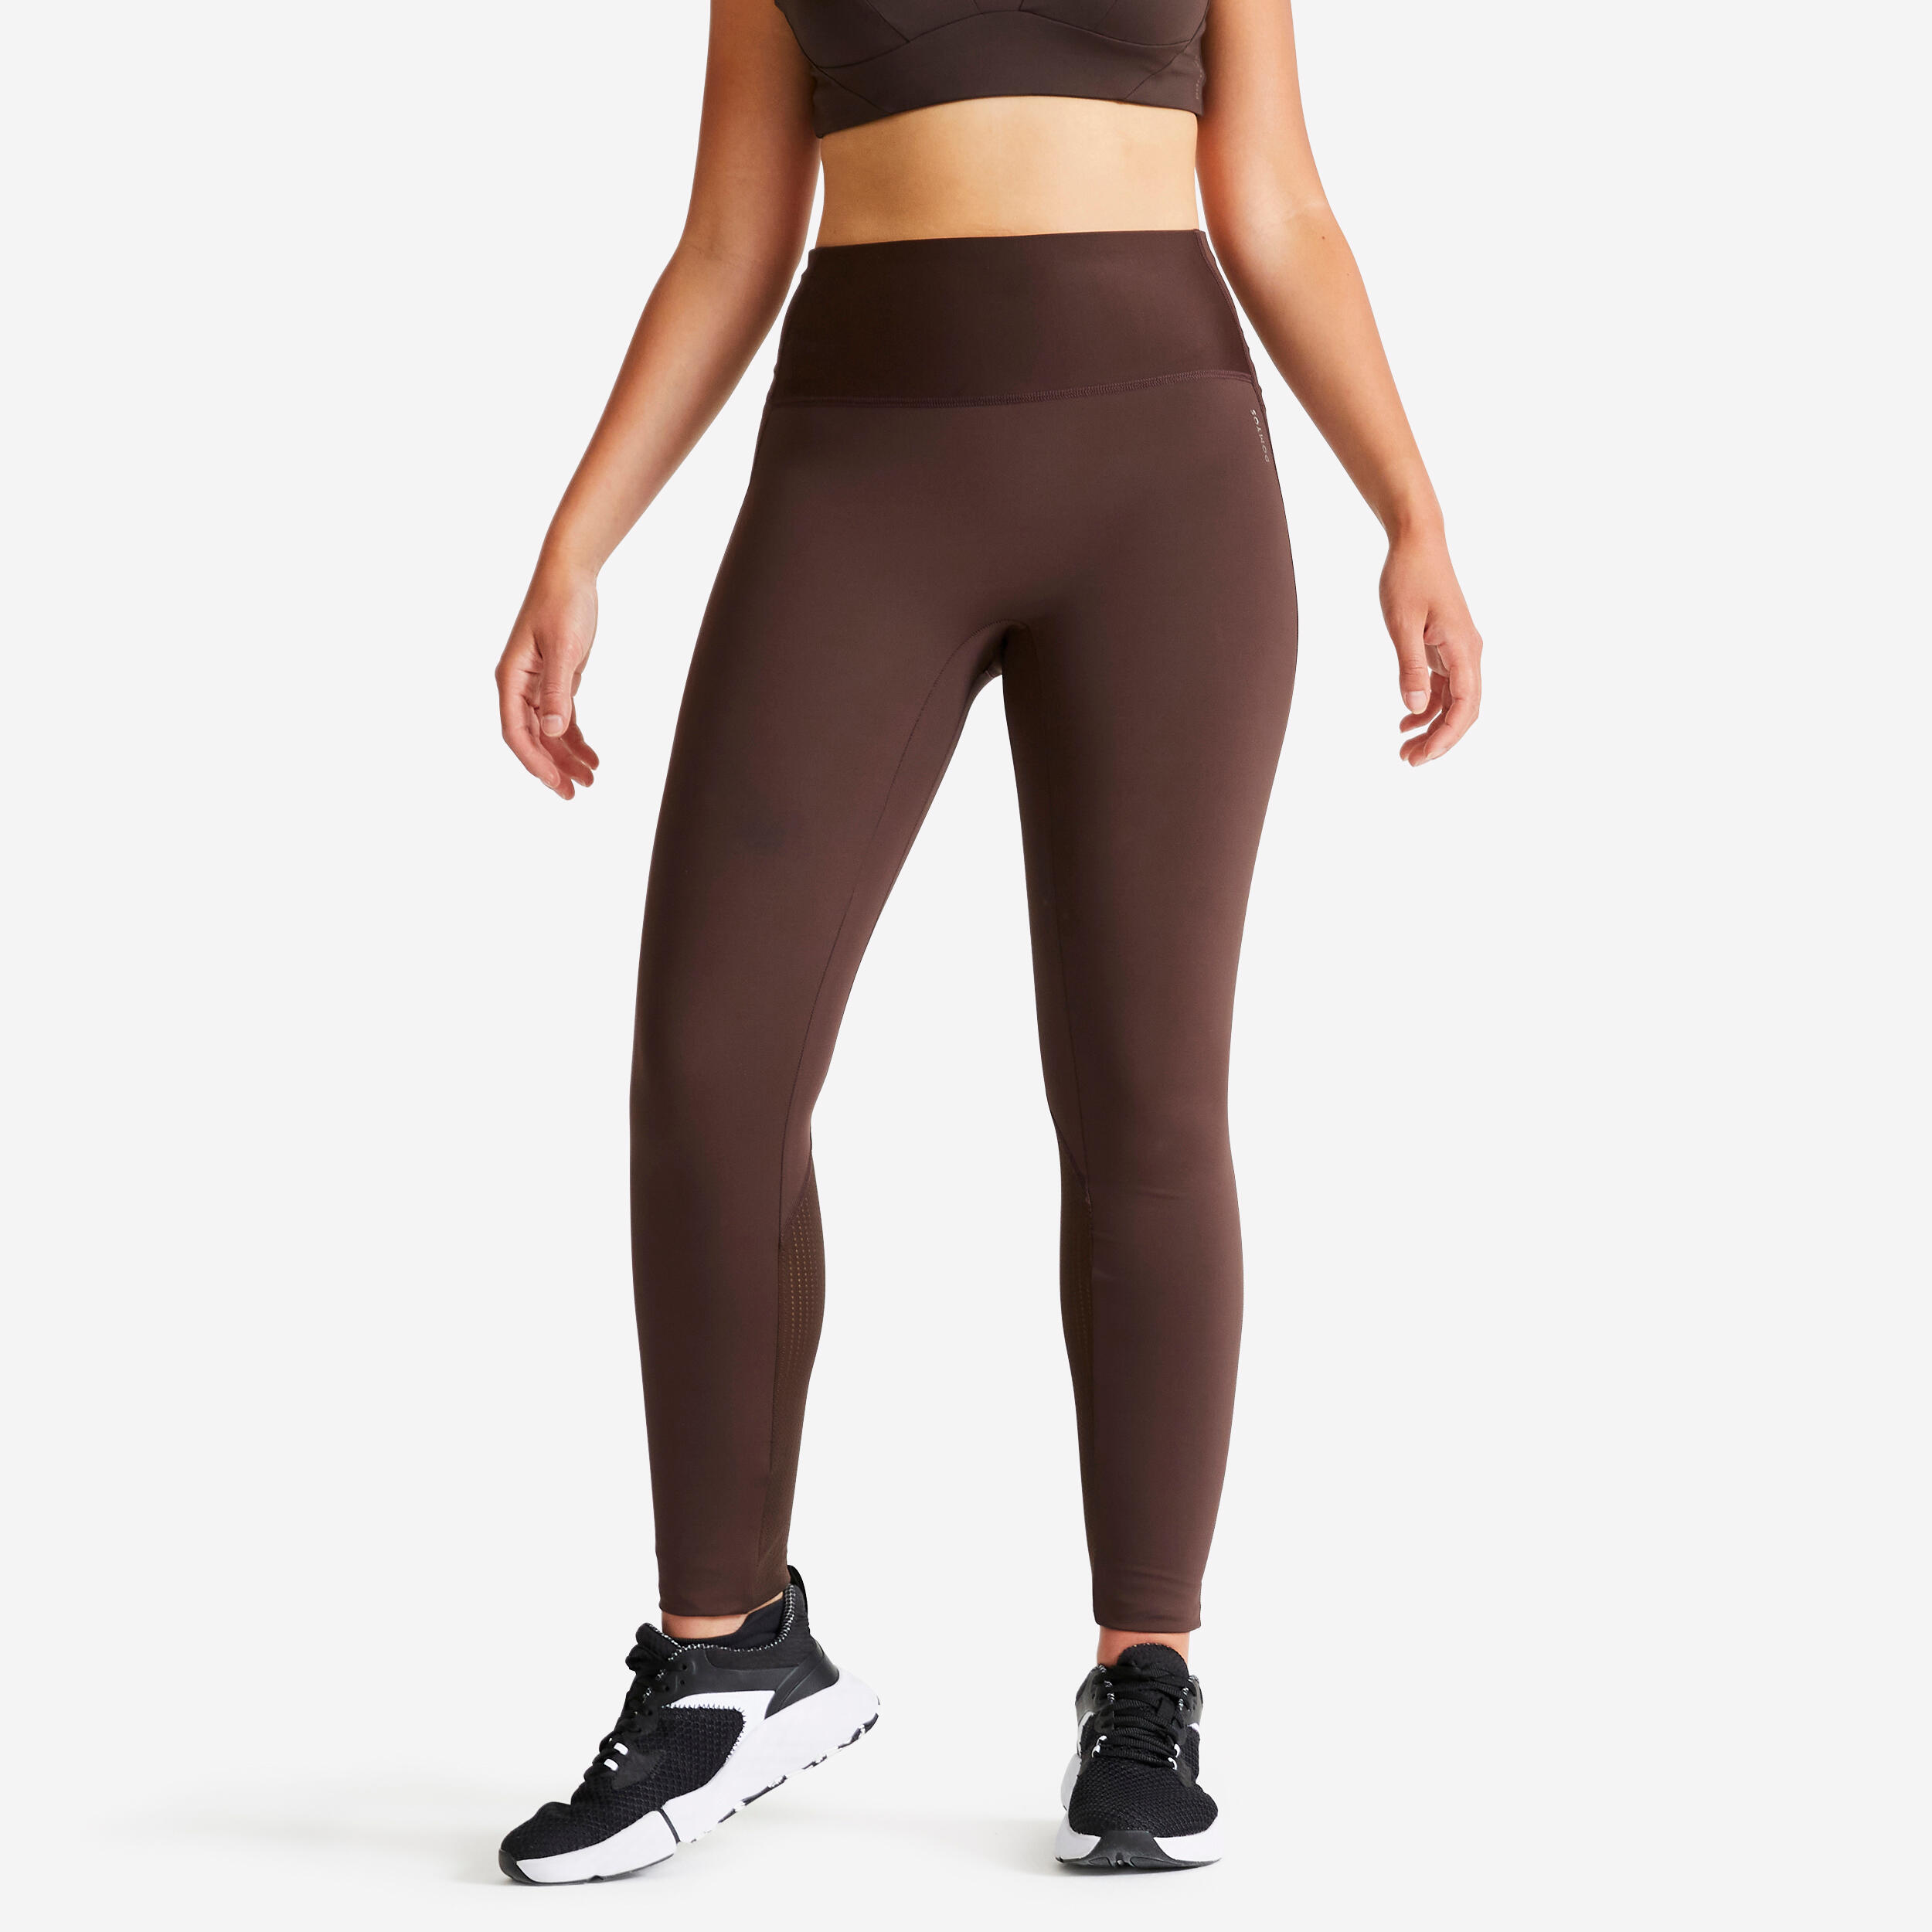 https://contents.mediadecathlon.com/p2606693/k$8aec5808ff608c2058340d108e9ab6b5/women-s-high-waisted-body-shaping-fitness-cardio-leggings-brown-domyos-8738322.jpg